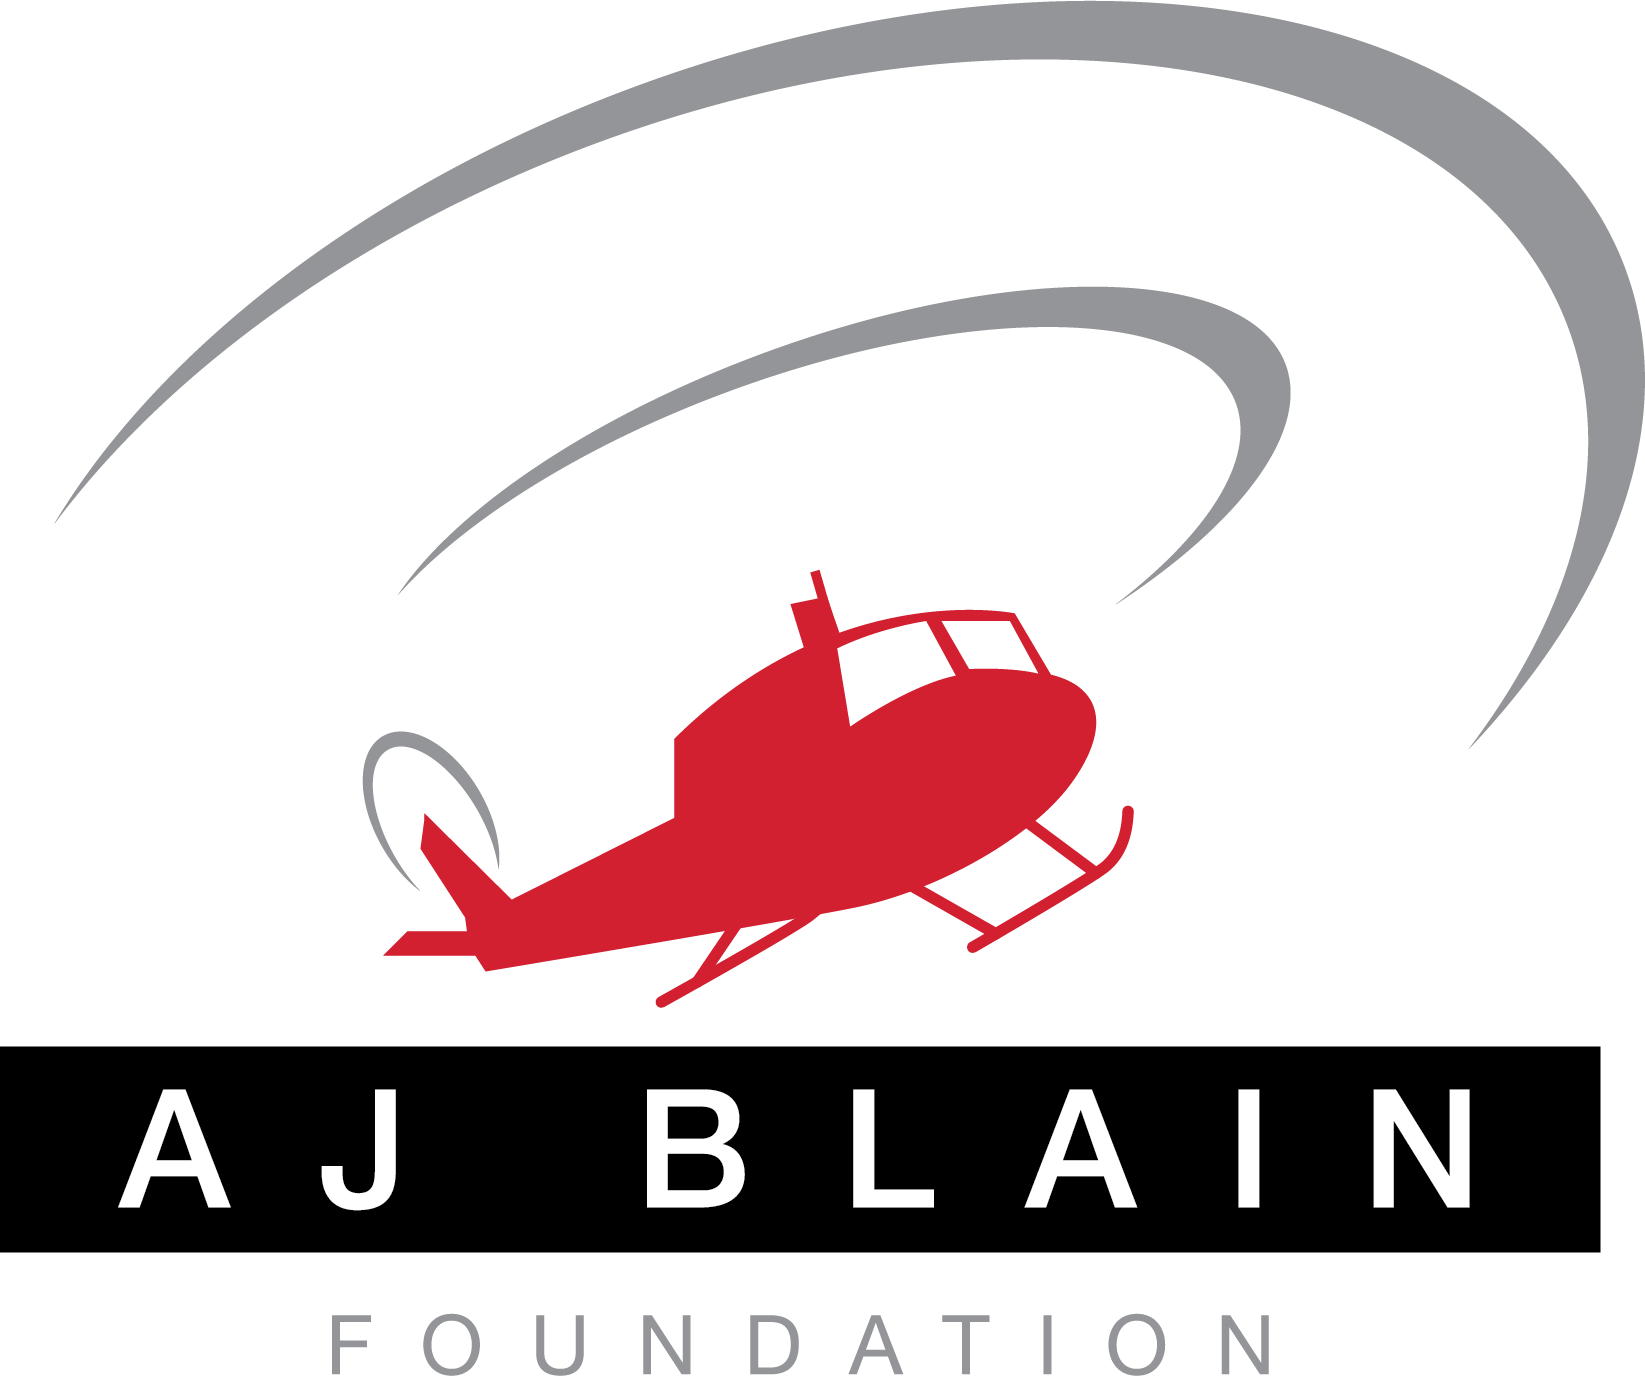 Aj Blain Foundation - Aj Blain Foundation (1645x1376)